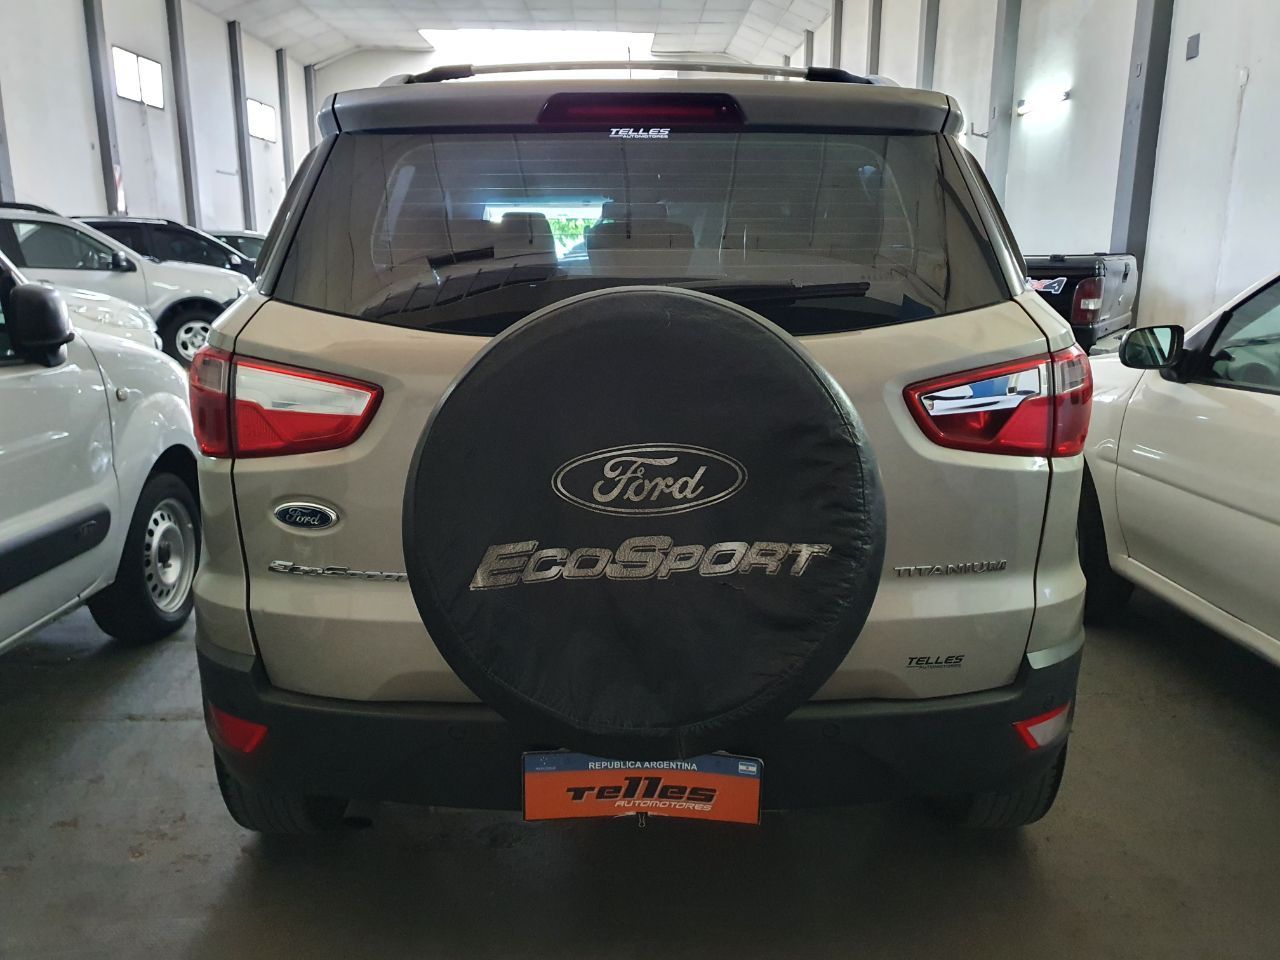 Ford EcoSport KD Usado en San Juan, deRuedas